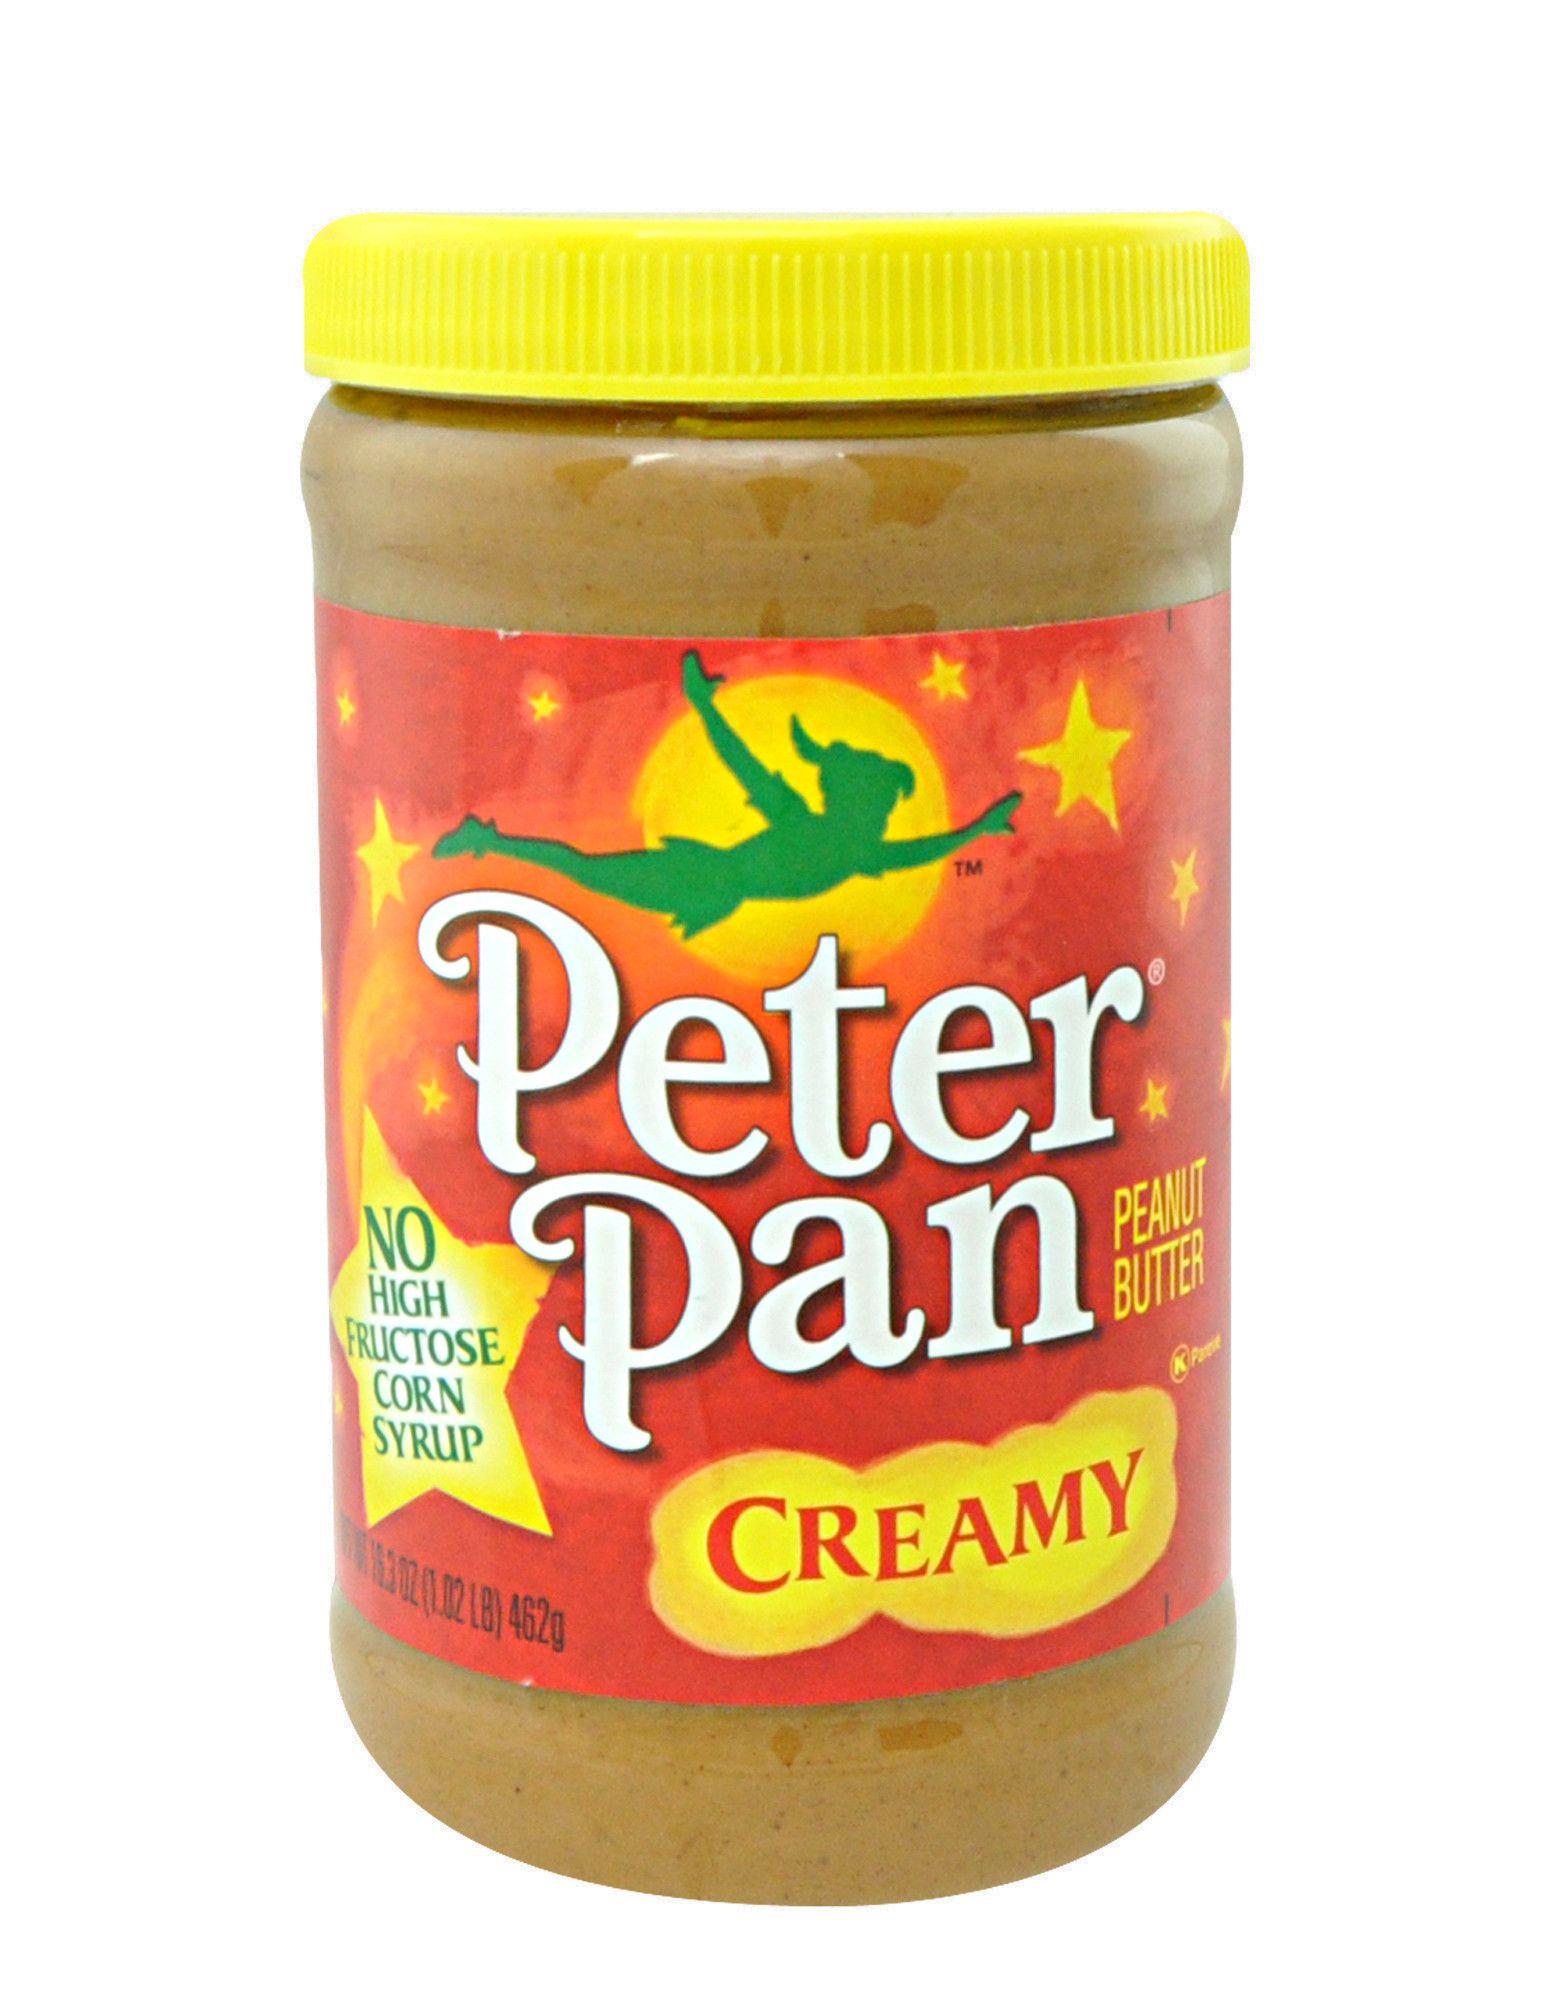 Peter Pan Peanut Butter Logo - Peter Pan Peanut Butter Creamy by PETER PAN (462 grams)